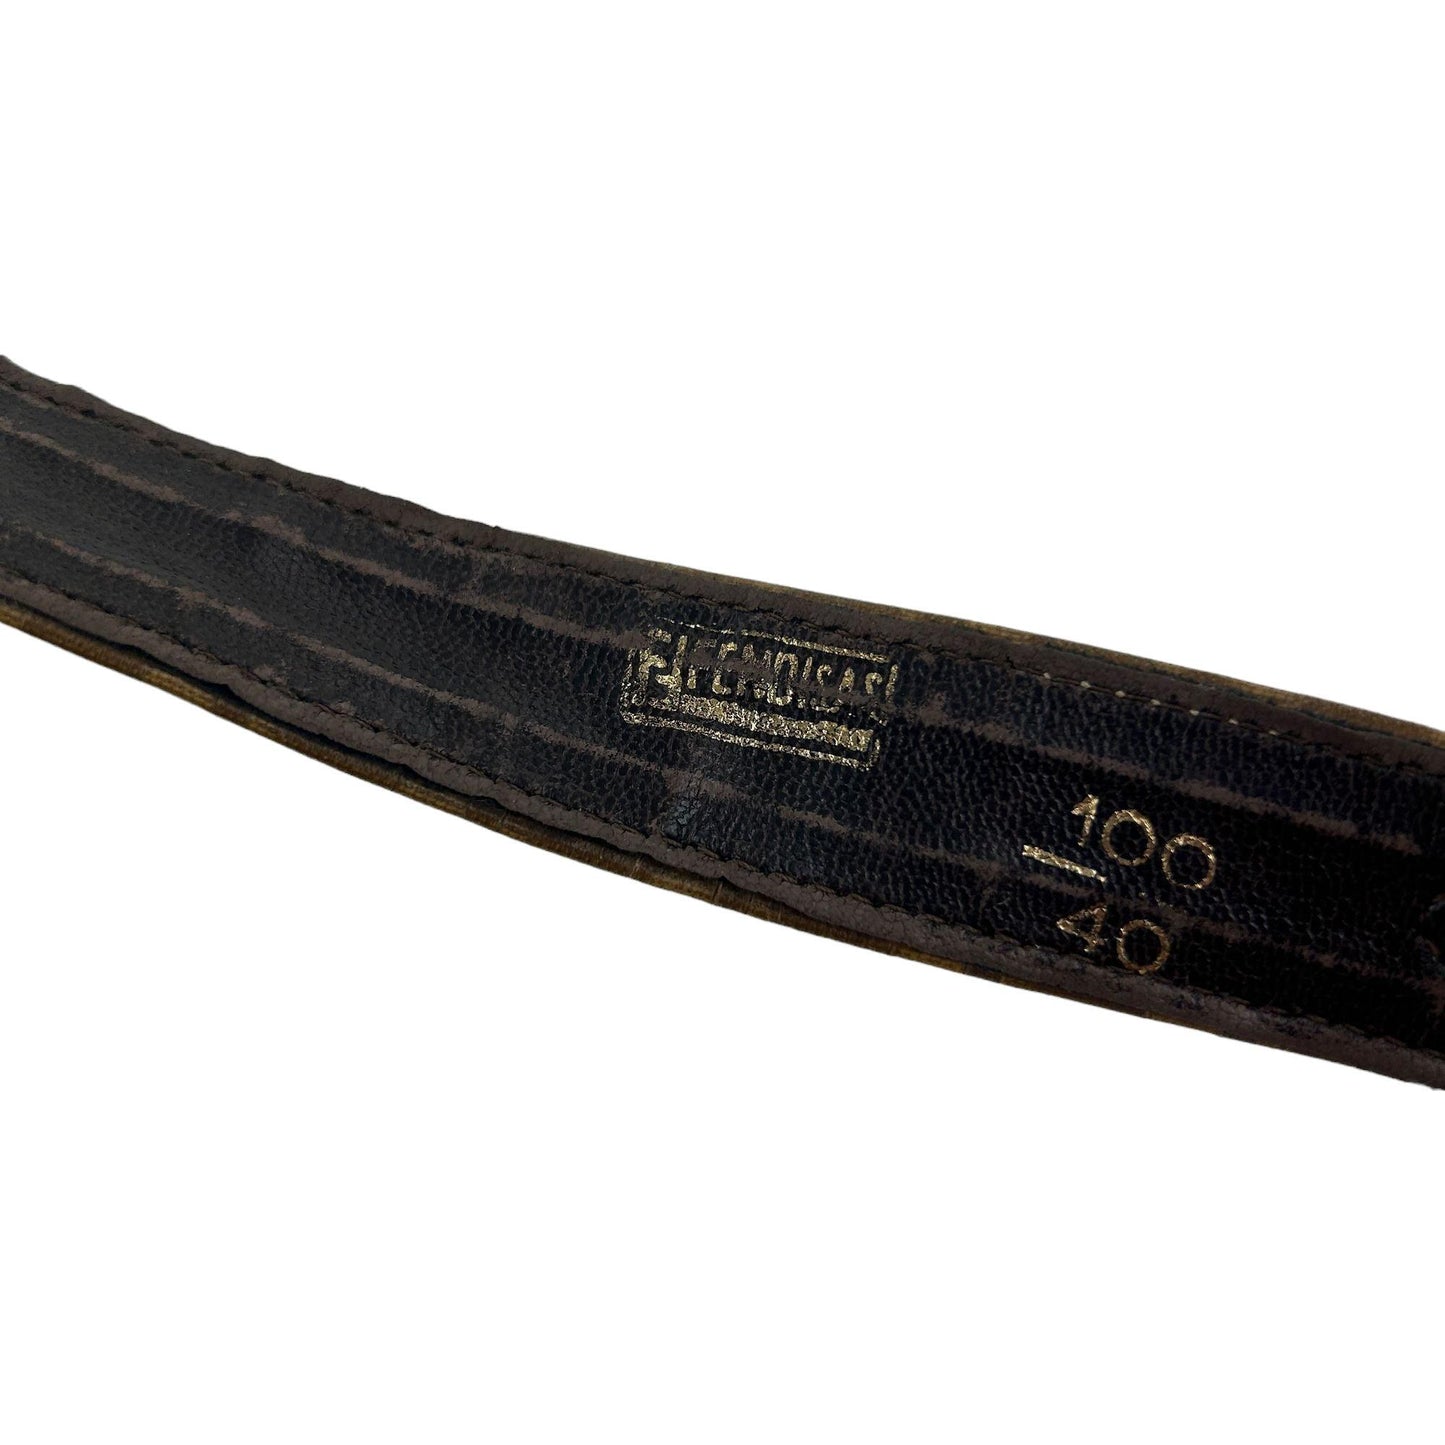 Vintage Fendi Monogram Belt Size 24" to 28" - Known Source